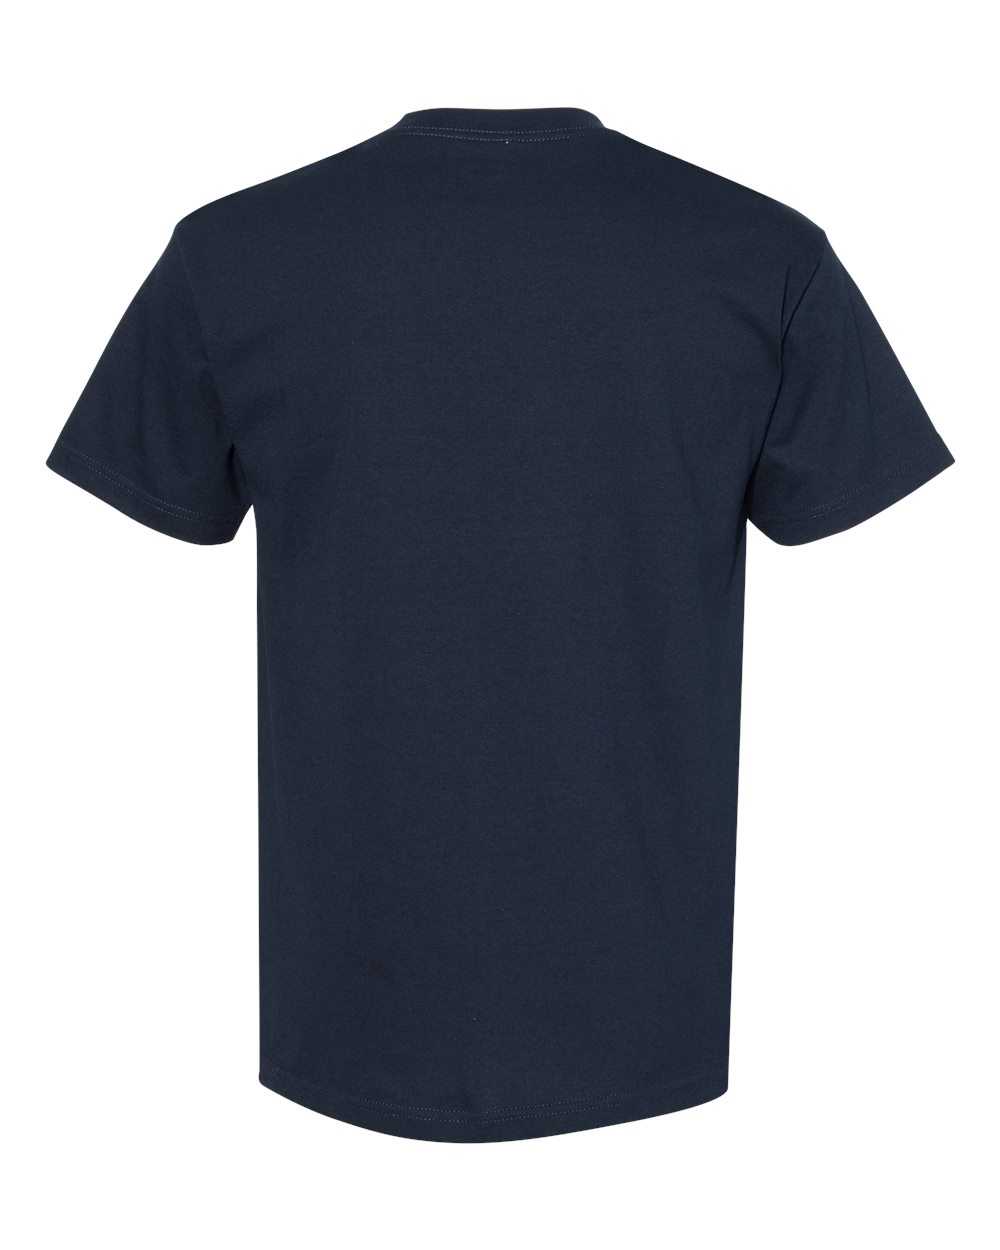 American Apparel 1301 Unisex Heavyweight Cotton T-Shirt - Navy - HIT a Double